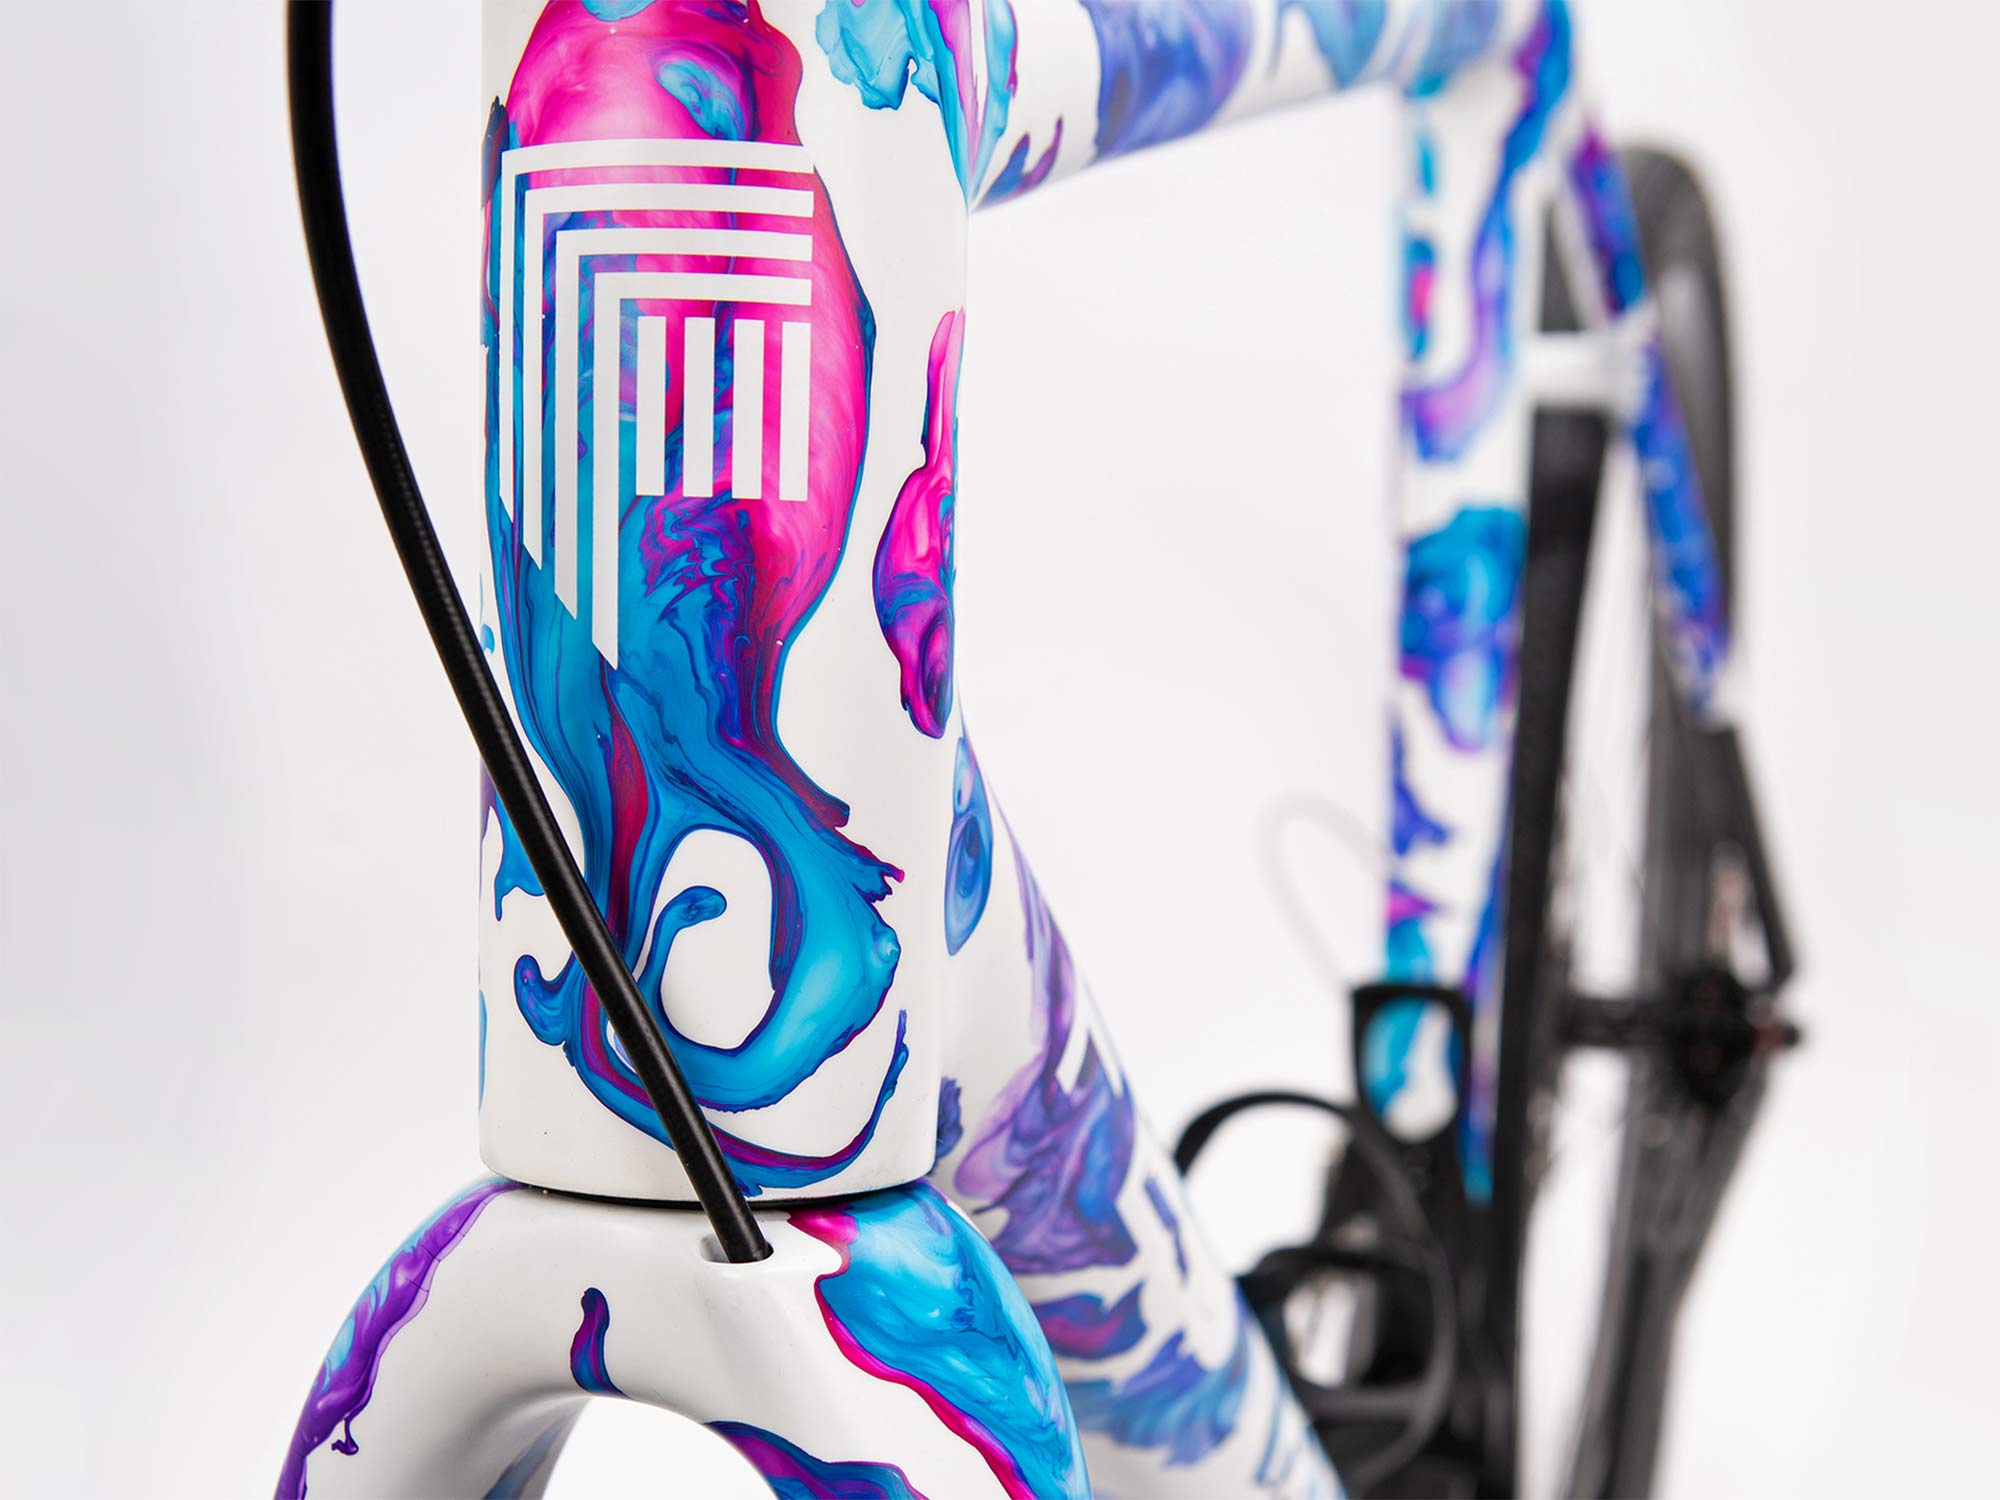 Festka Scout Ondrash&Kasparek custom artist series carbon gravel bike collaboration, photo by Tom Hnida, headtube